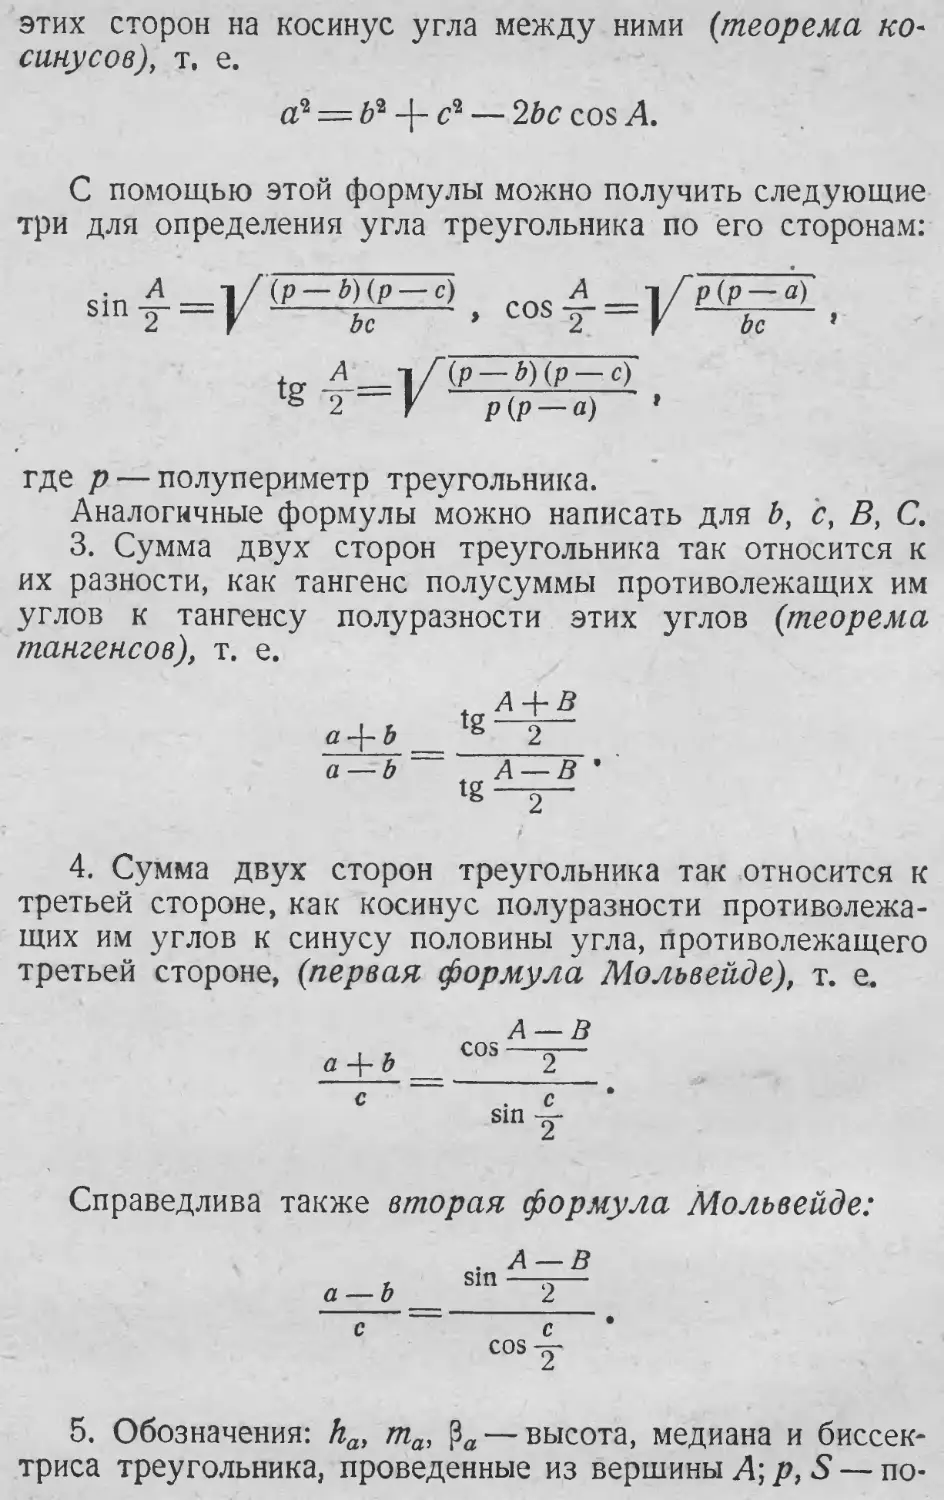 Теорема косинусов
Теорема тангенсов
Формулы Мольвейде